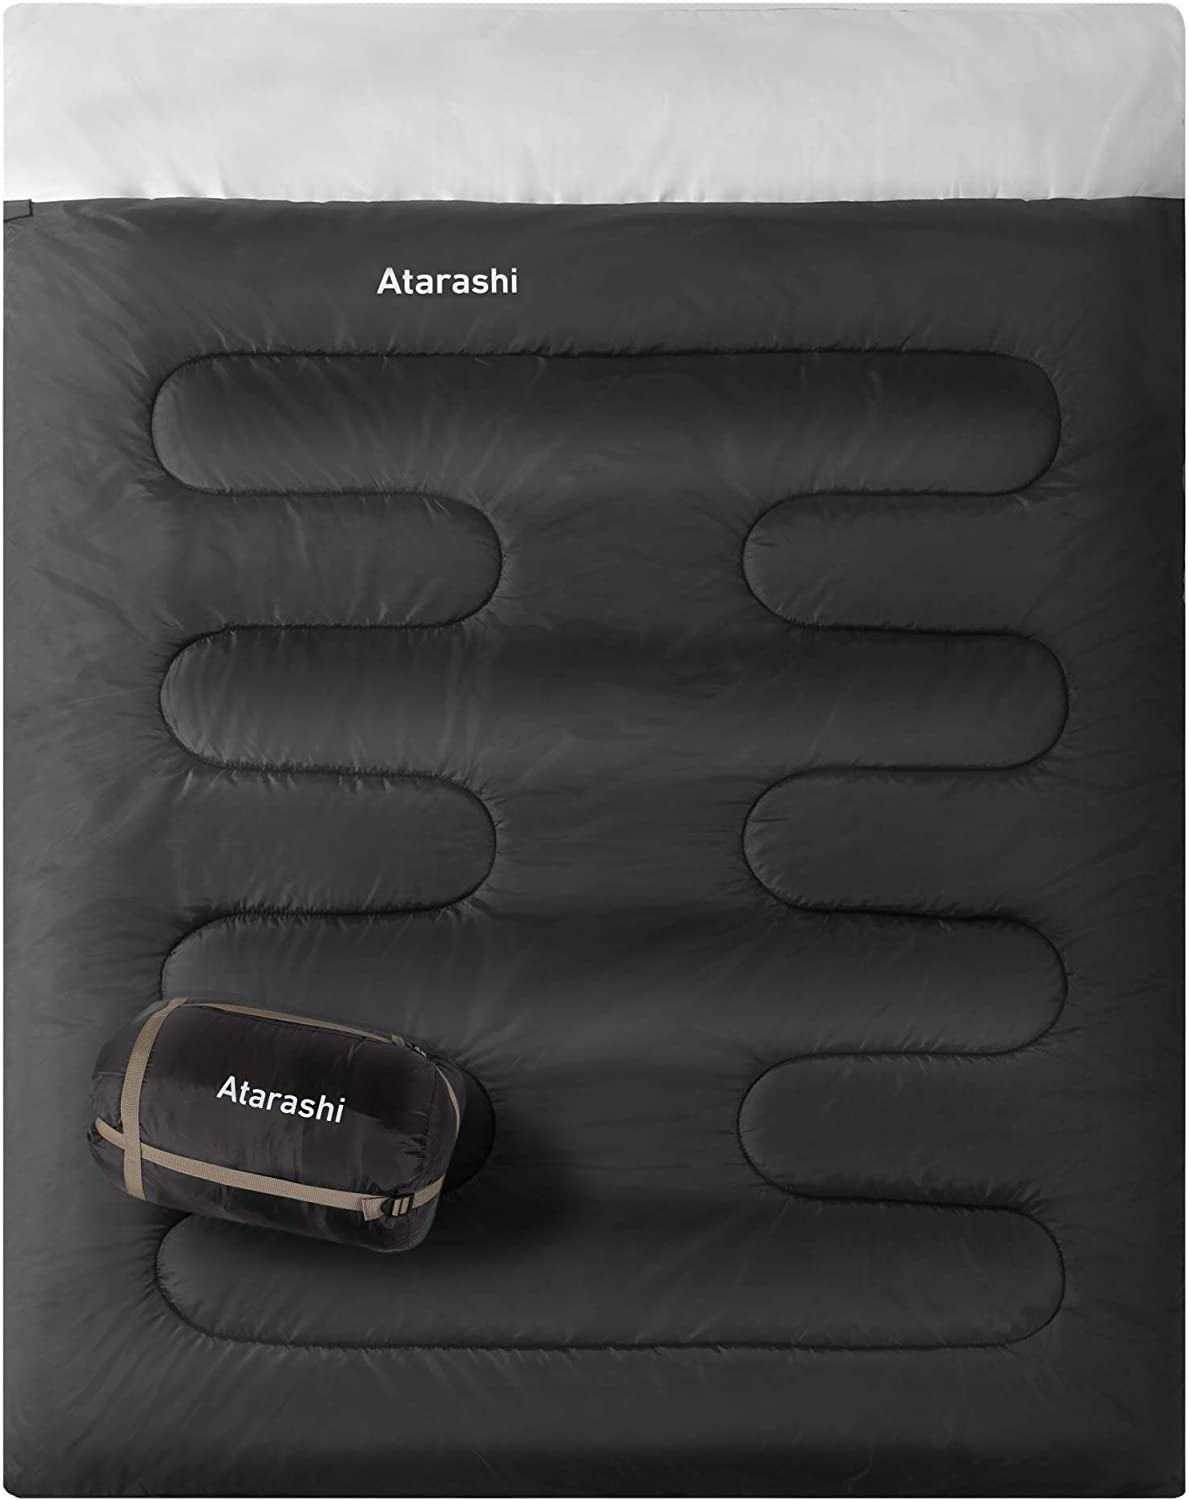 Atarashi Camping Sleeping Bag- 4 Seasons for Adults, Light, Warm,  Extra-Large wi | eBay